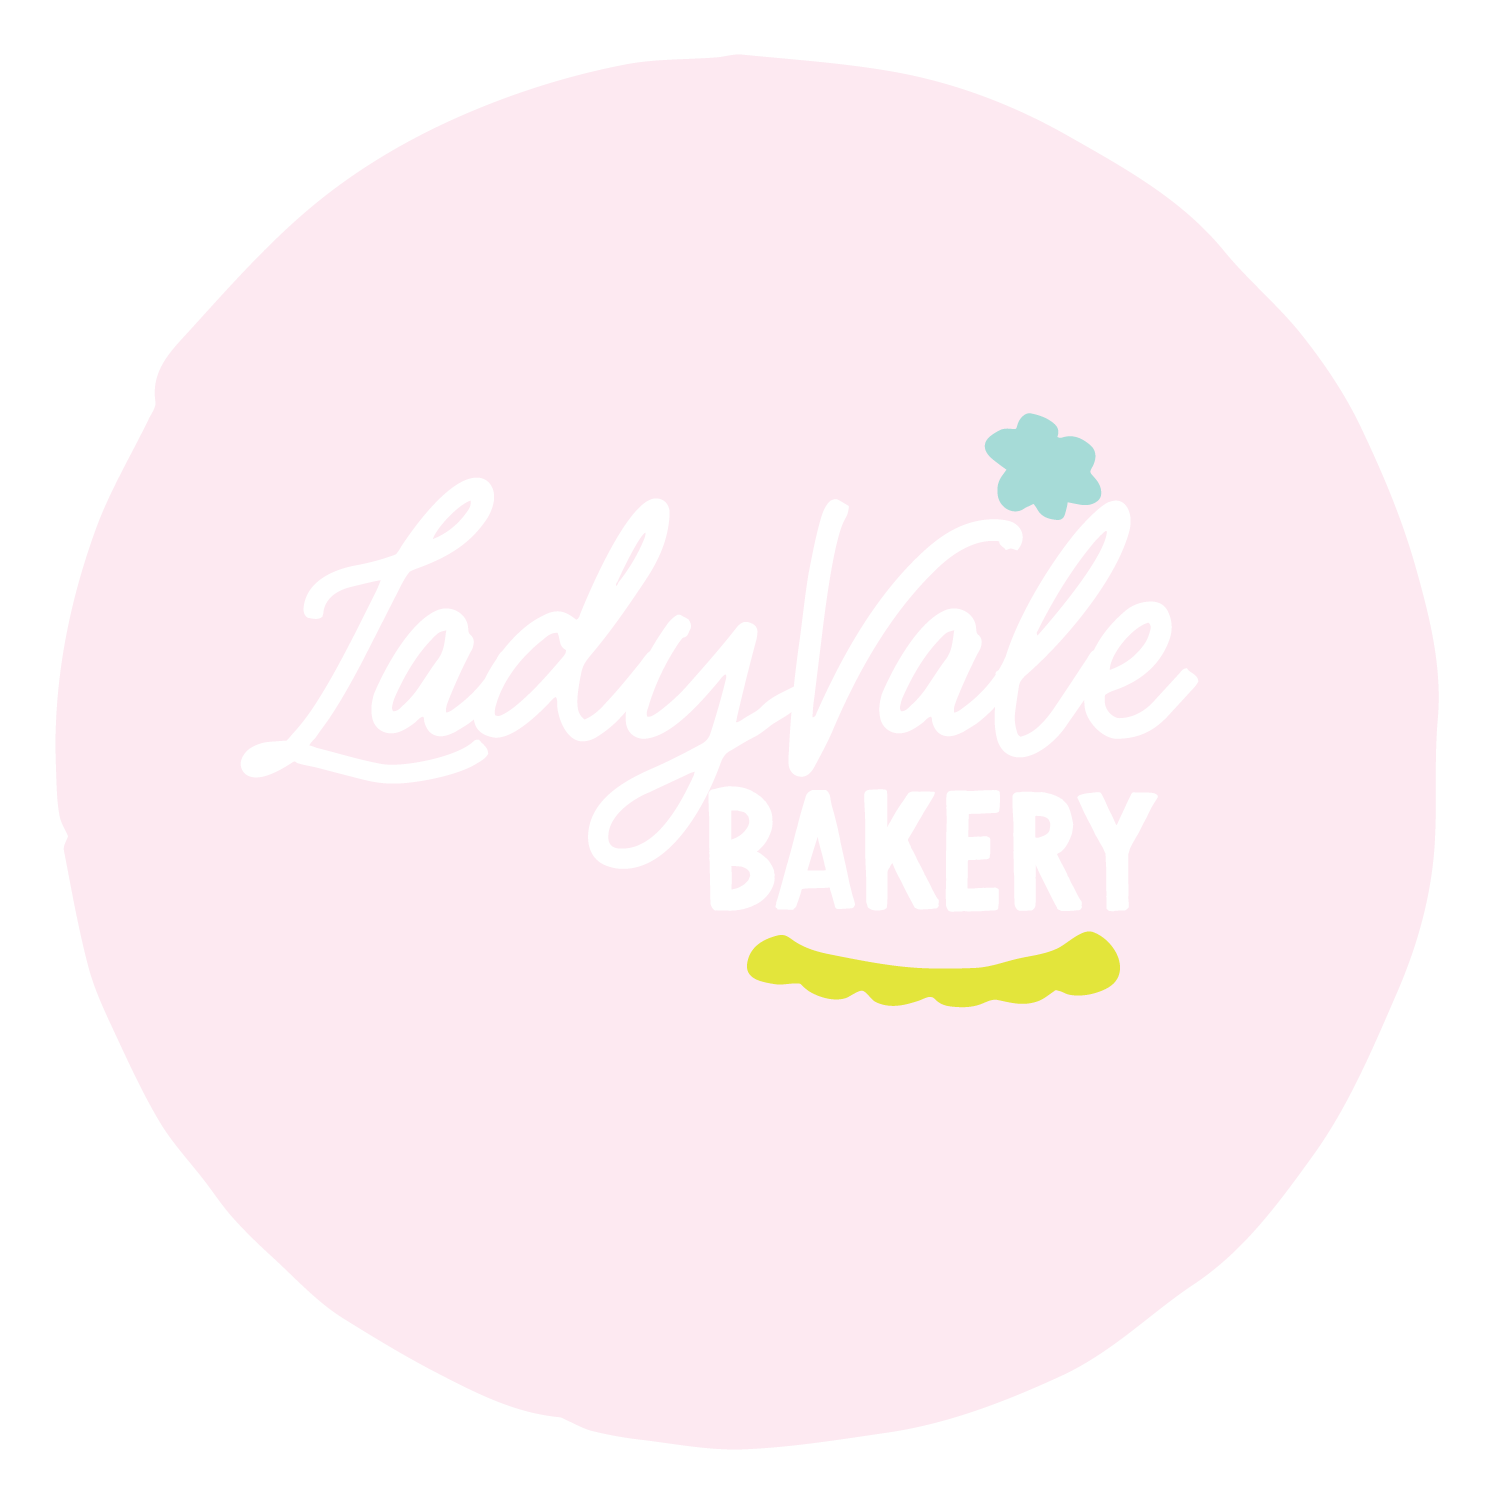 Ladyvale Bakery